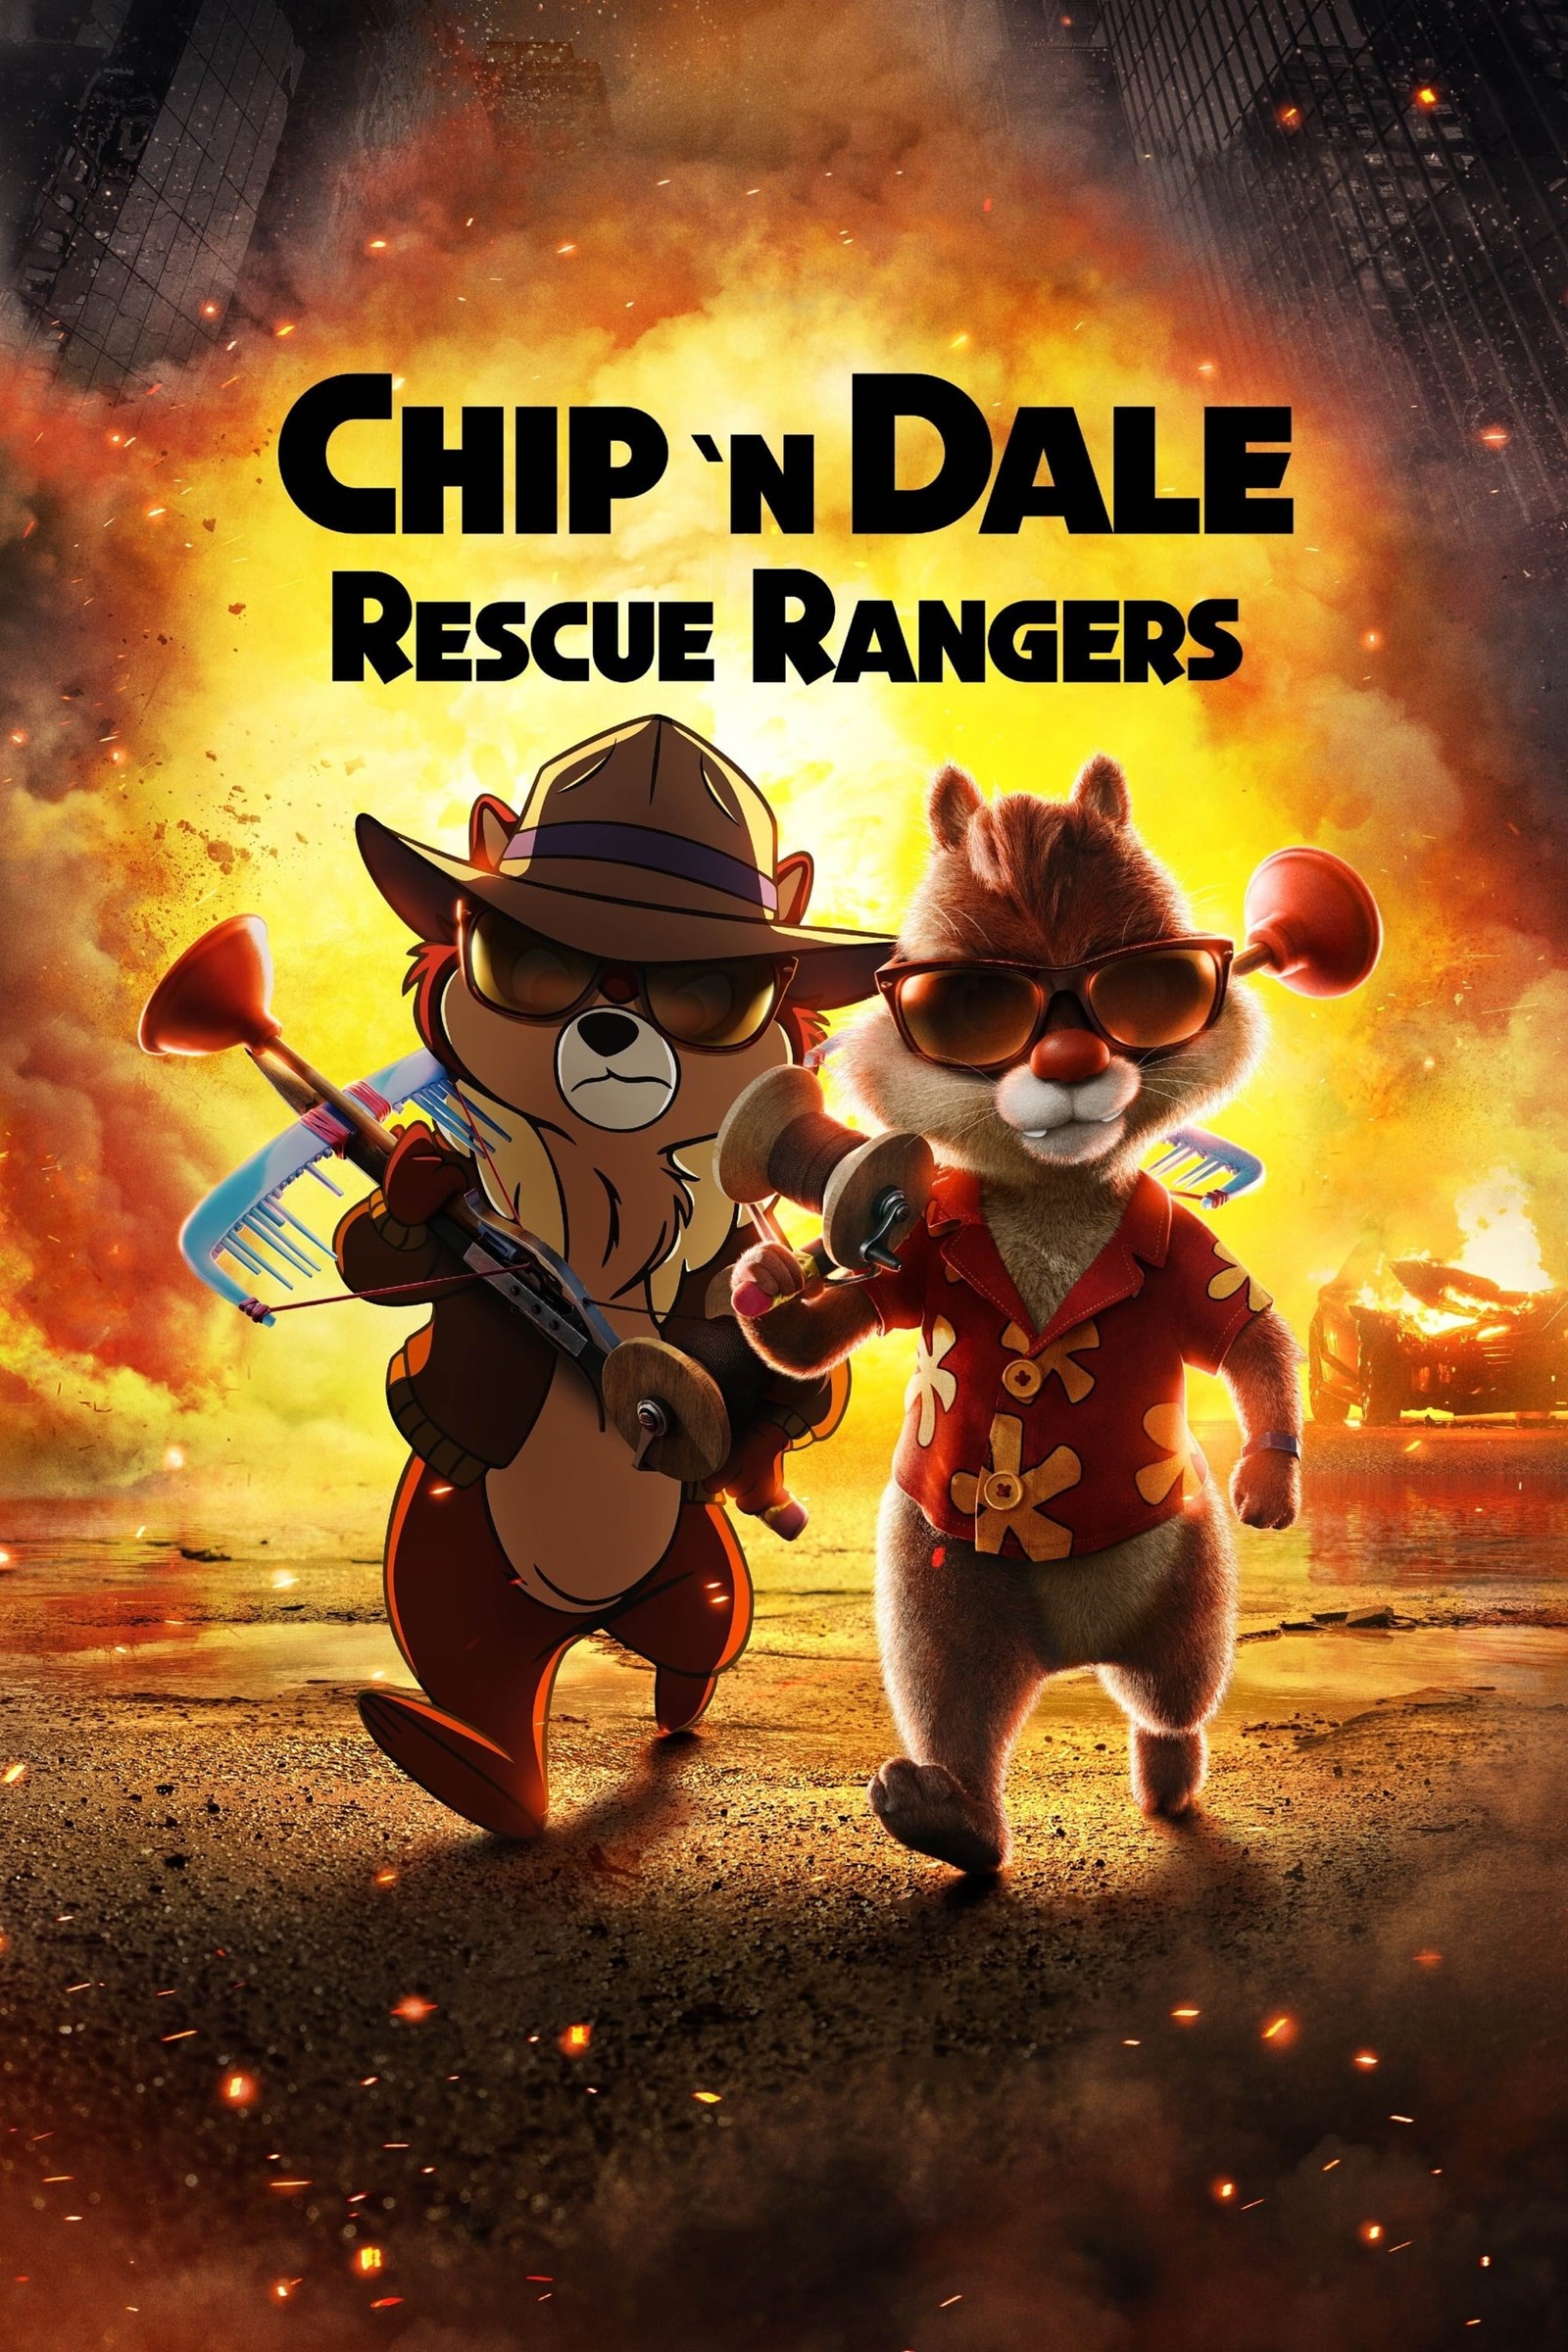 https://i.jeded.com/i/chip-n-dale-rescue-rangers.237993.jpg